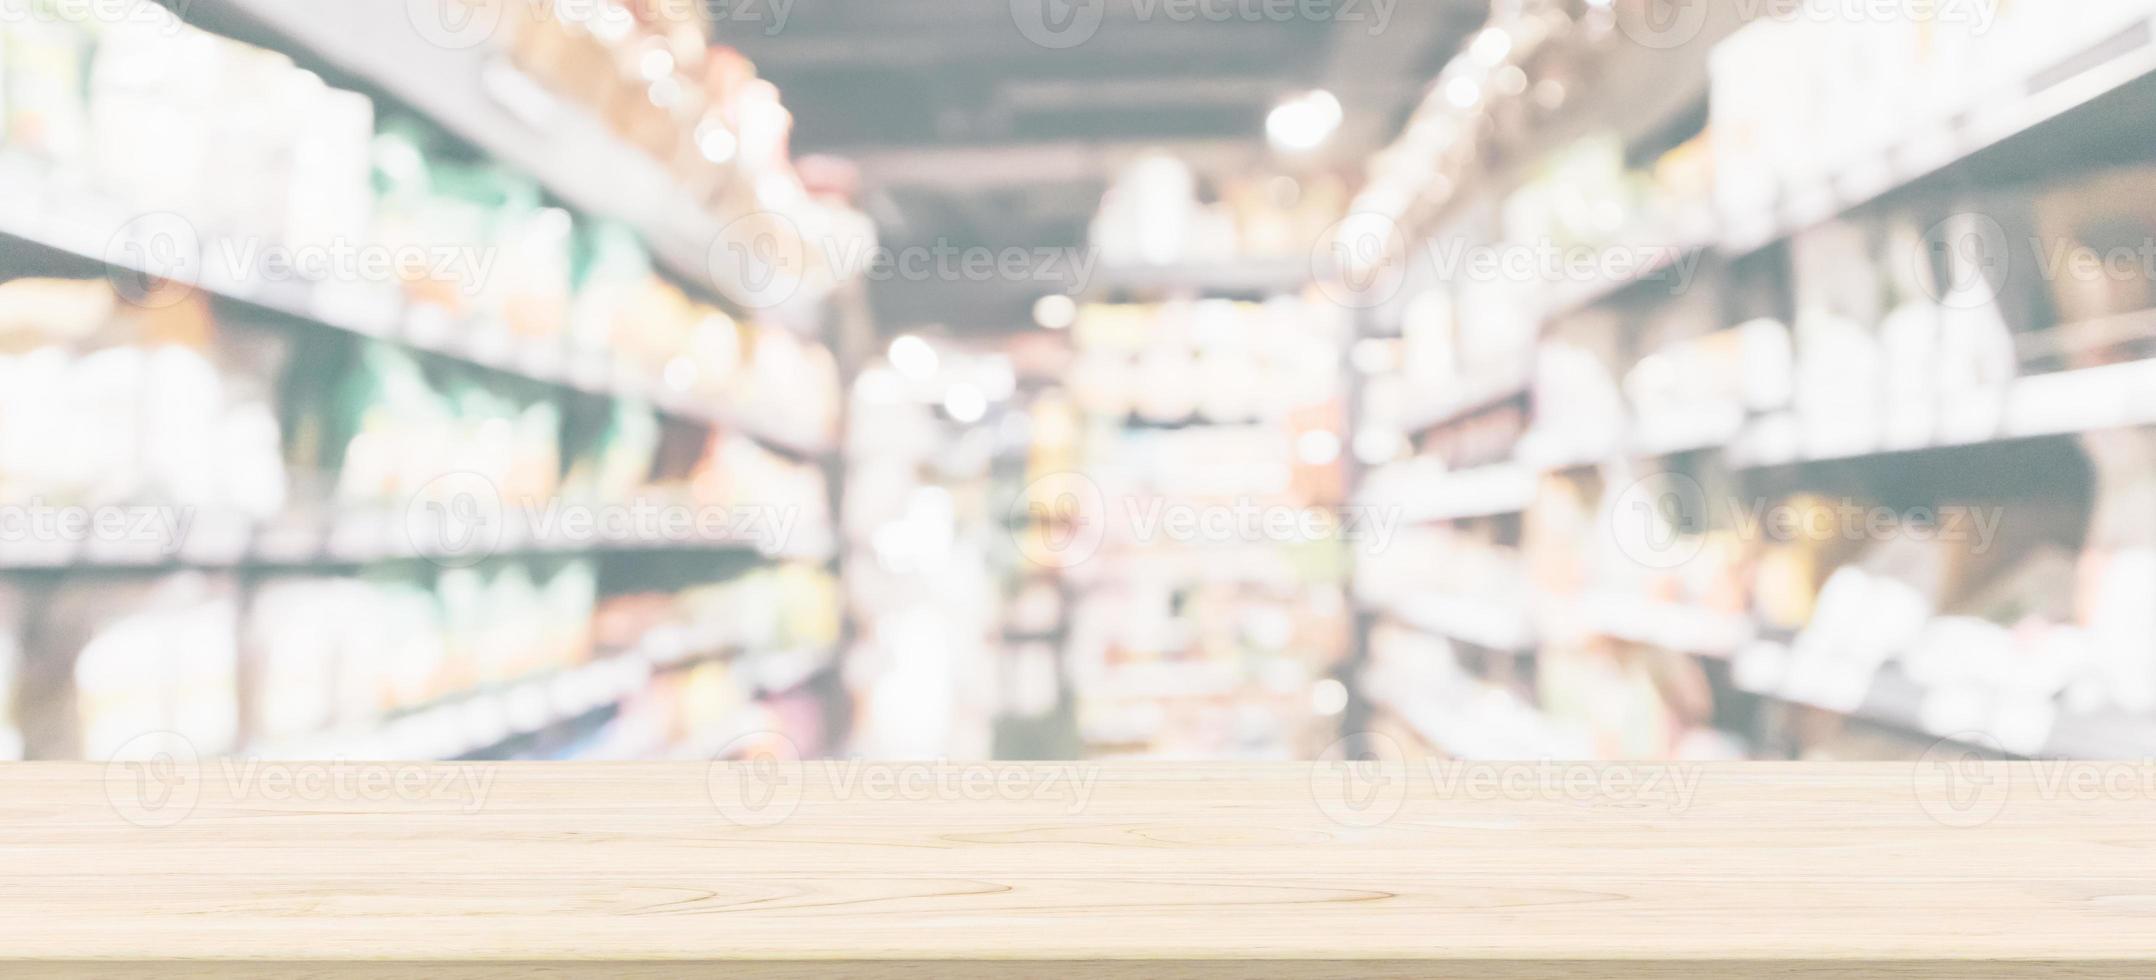 tampo da mesa de madeira com geladeira de mercearia de supermercado abstrato turva fundo desfocado com luz bokeh foto